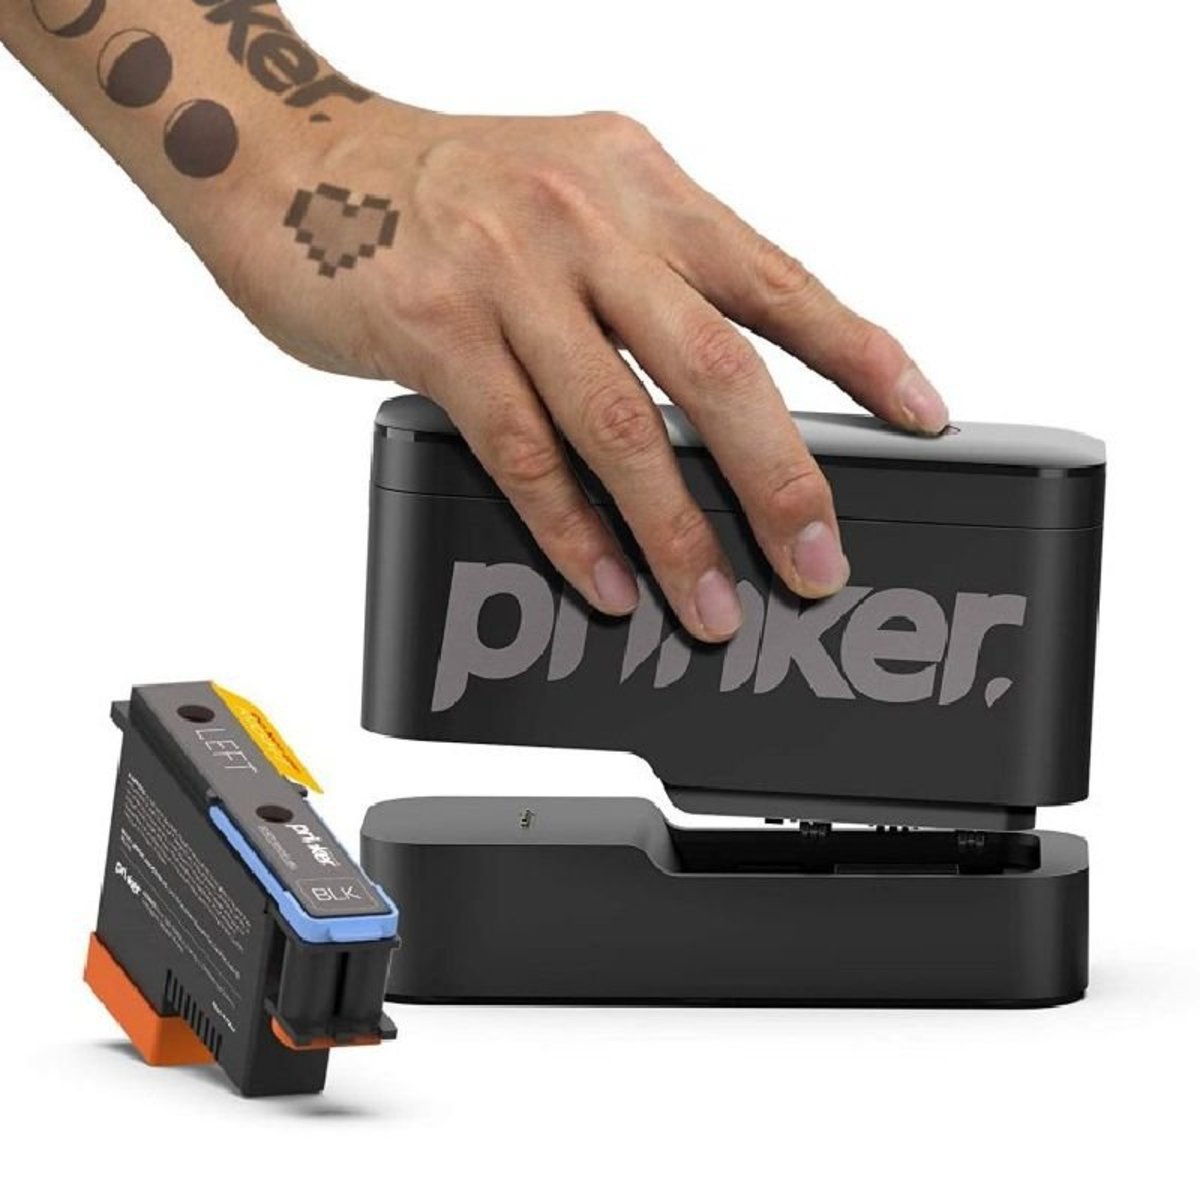 Prinker - 韓國 Prinker S 短暫紋身打印機 (包括黑色墨及定形液)